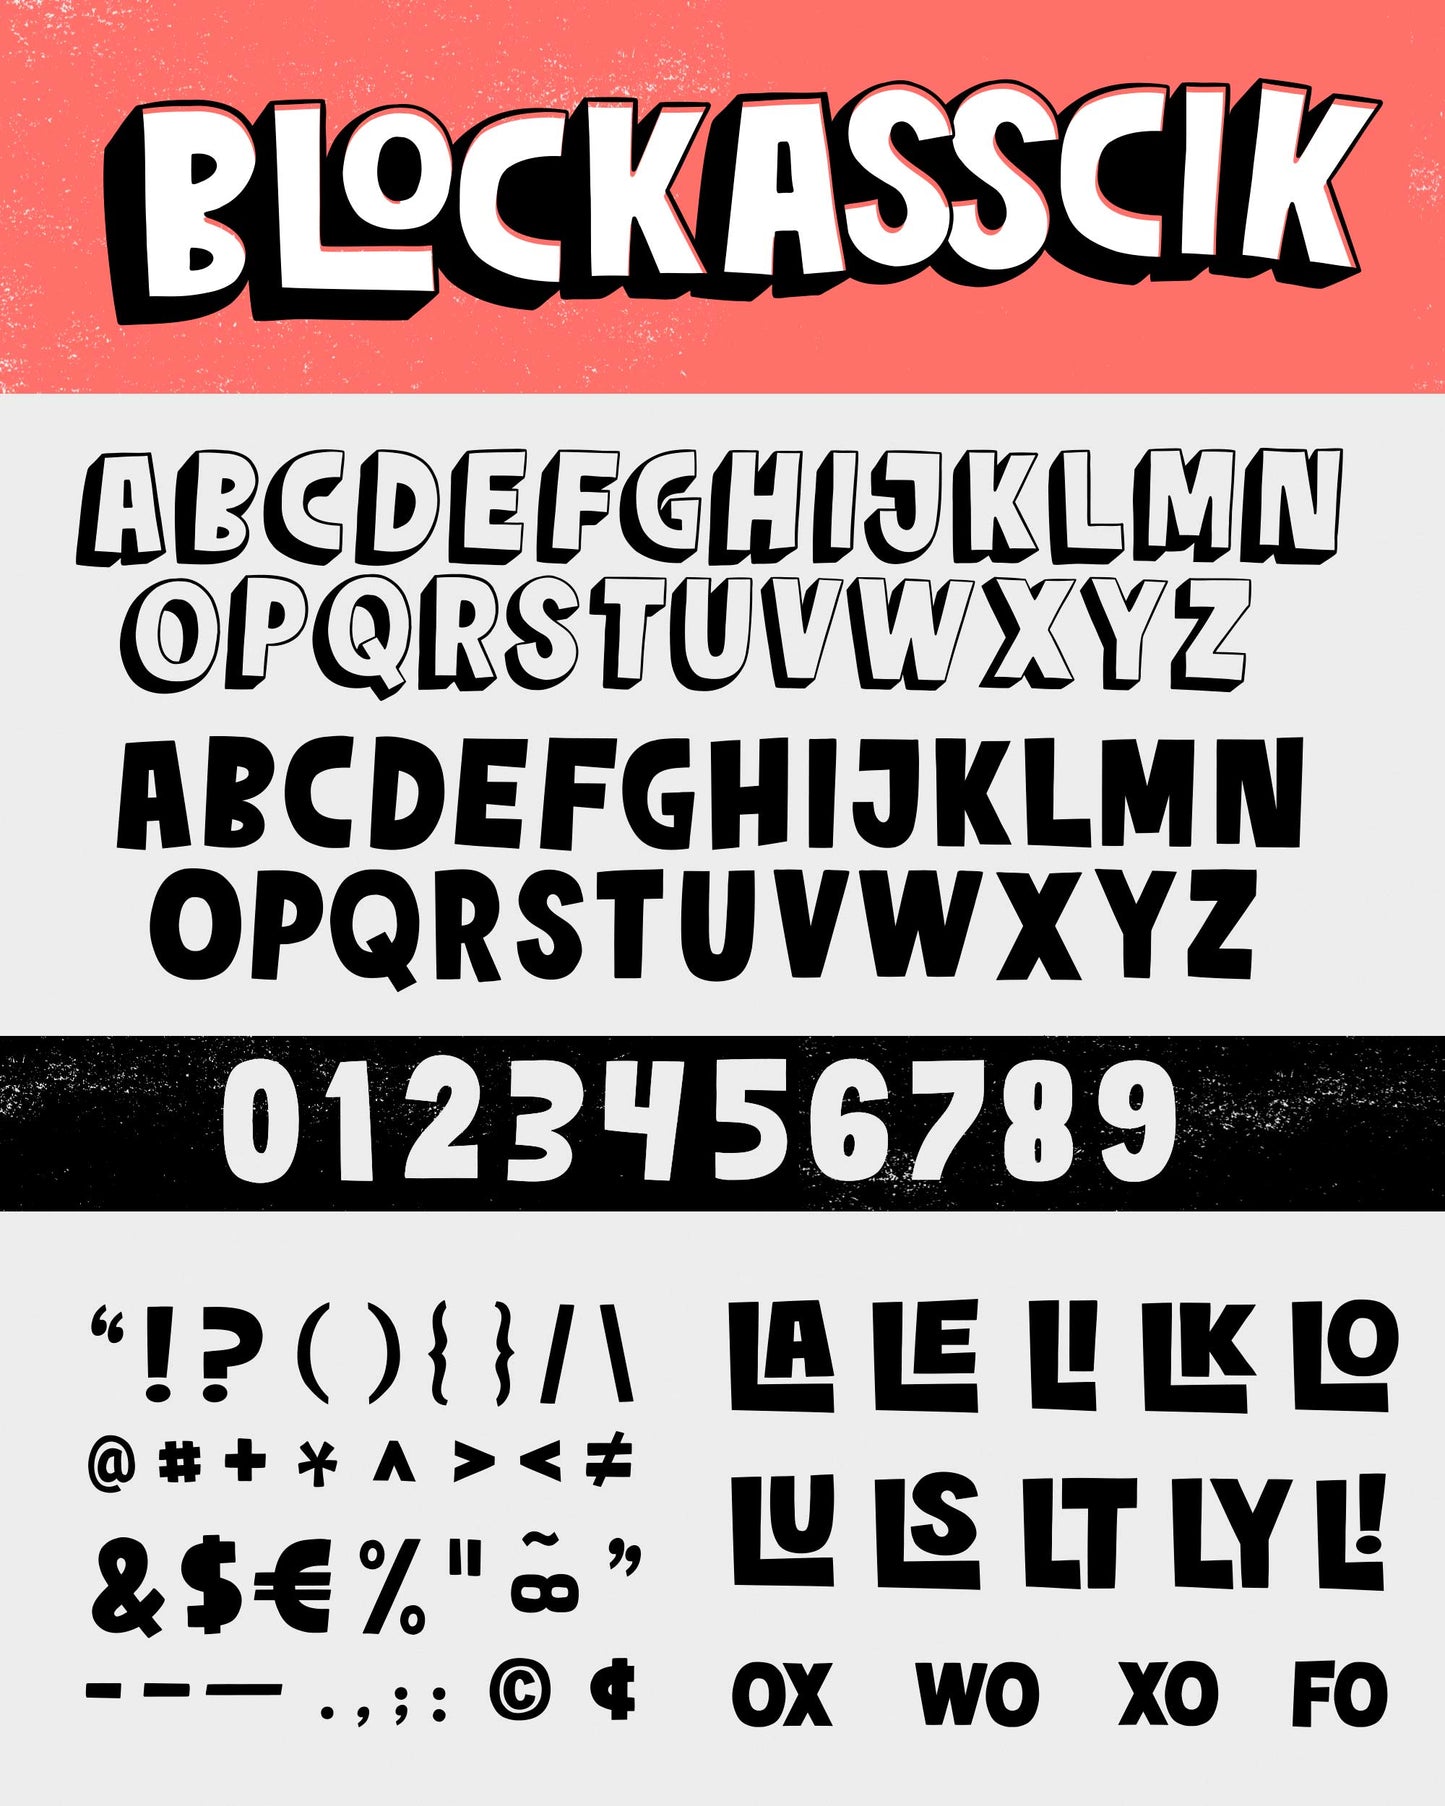 MEGA Font Pack! - Chris Piascik Collection